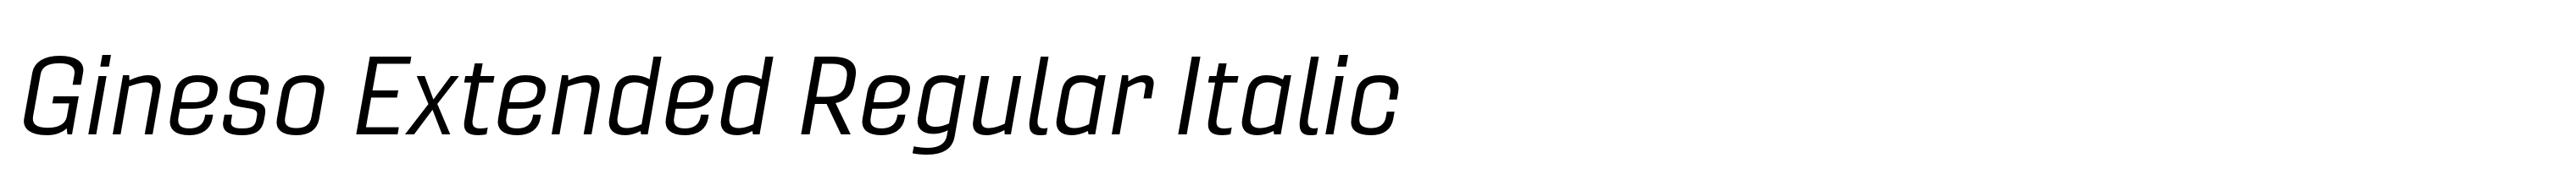 Gineso Extended Regular Italic